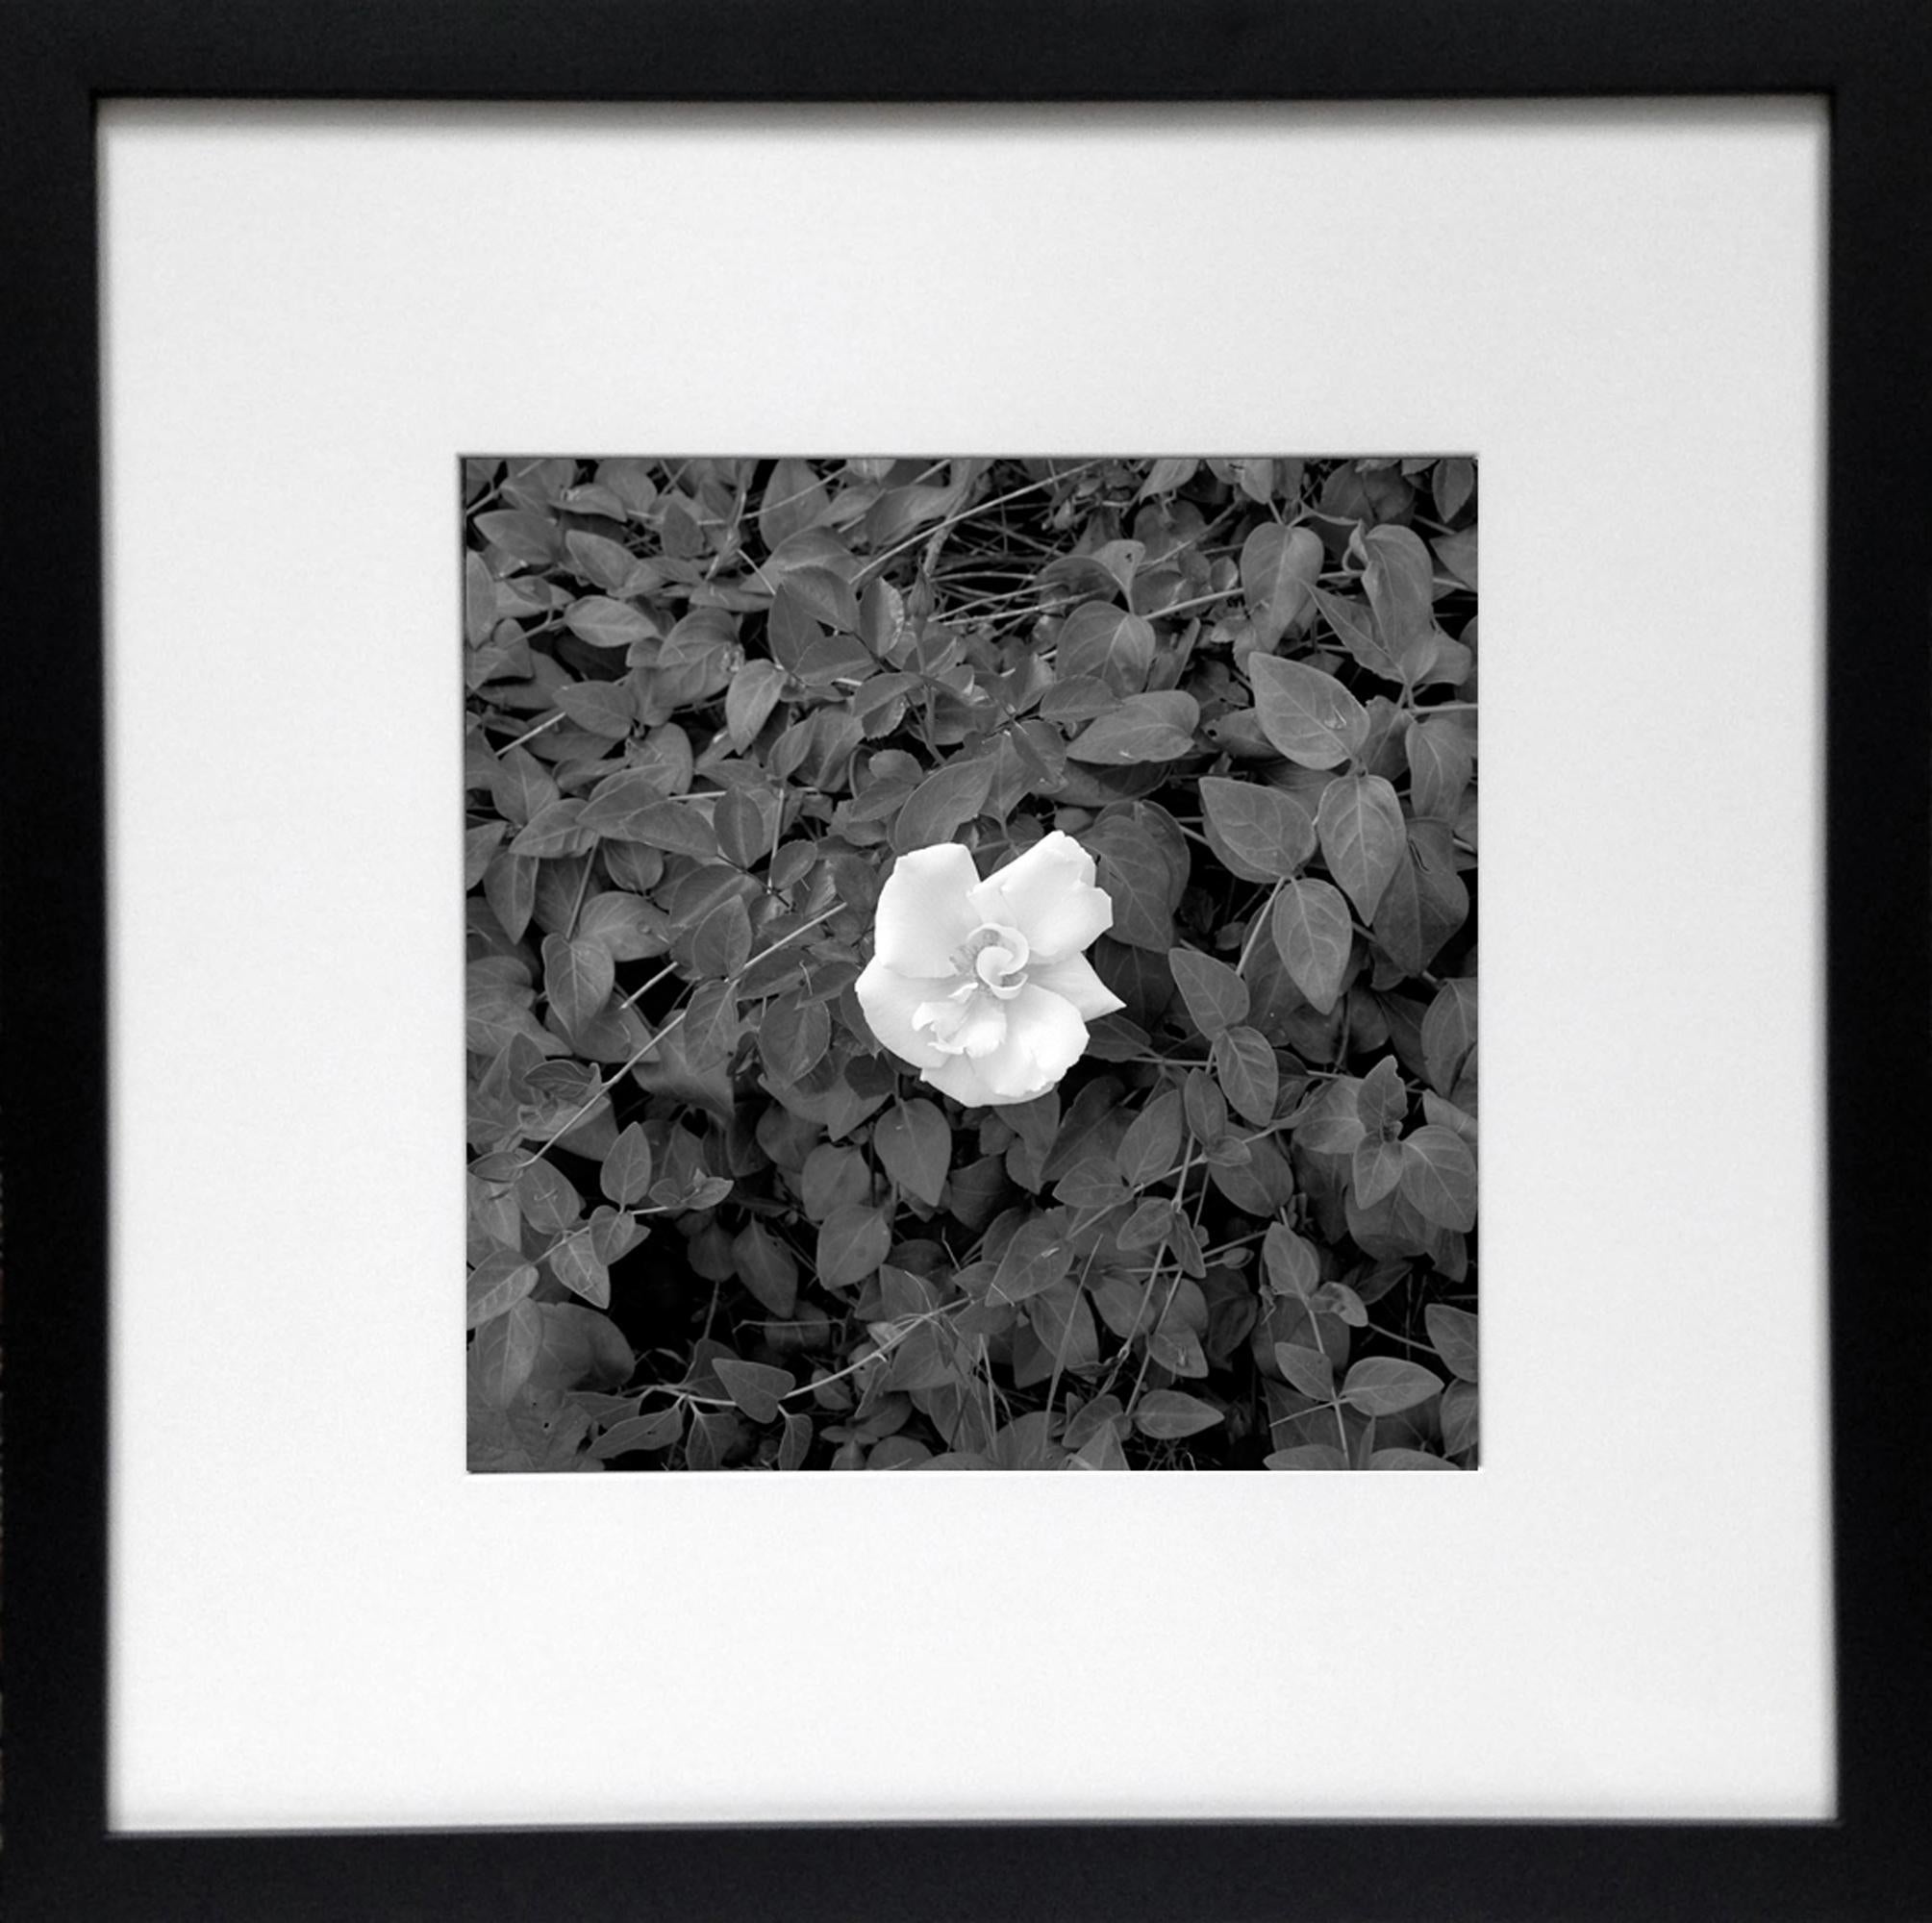 Gardenia: black & white framed photograph, flower w/ vines & leaves in landscape - Realist Photograph by Jenny Lynn